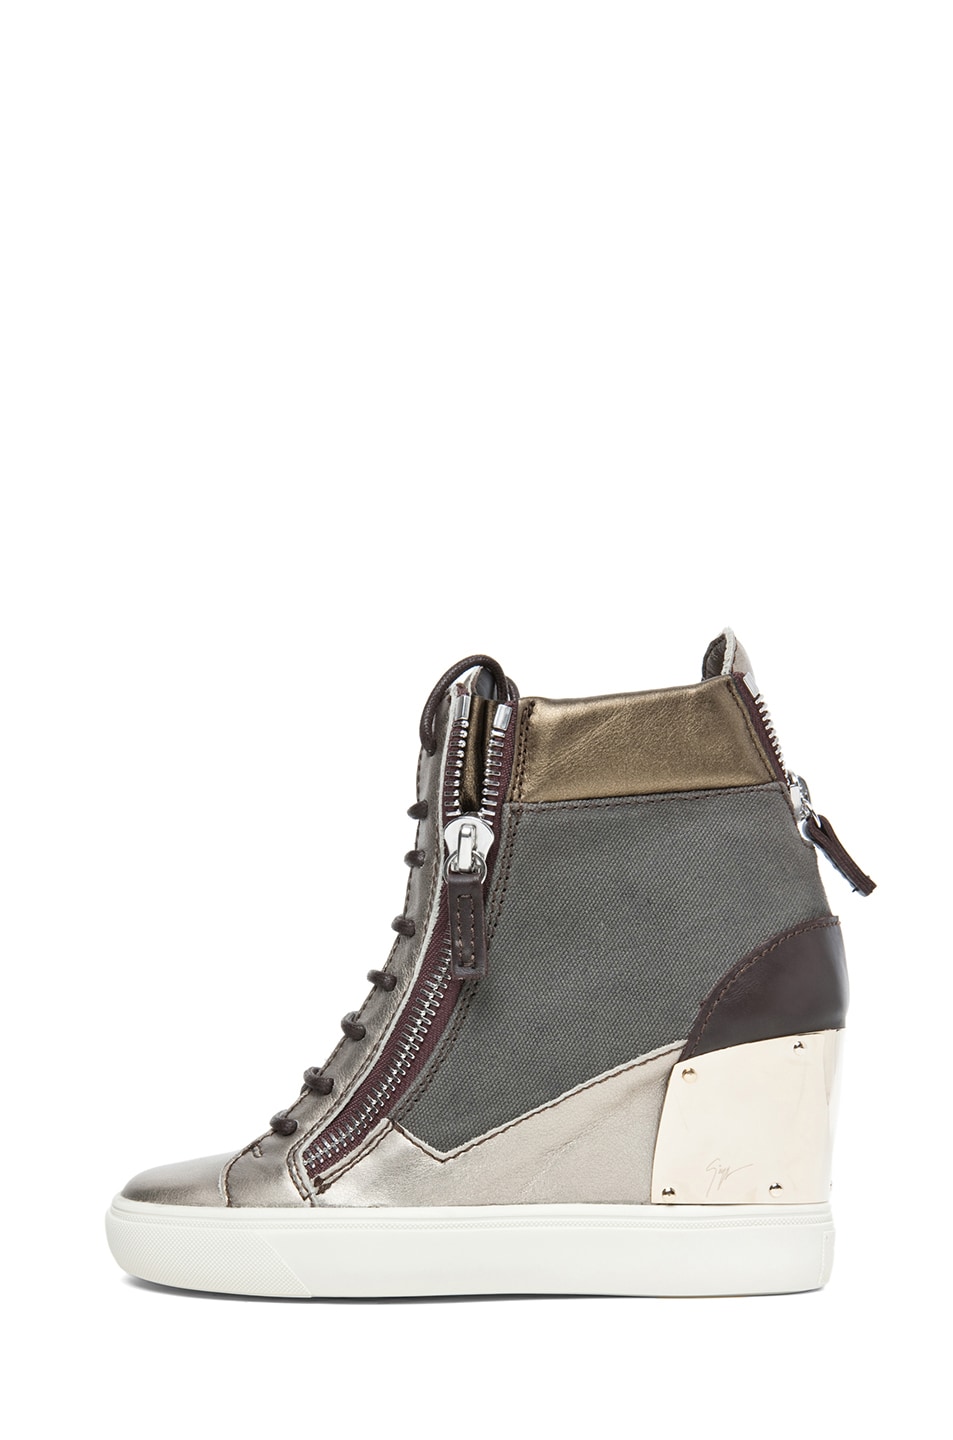 Image 1 of Giuseppe Zanotti Canvas & Leather Wedge Sneakers in Khaki & Metallic